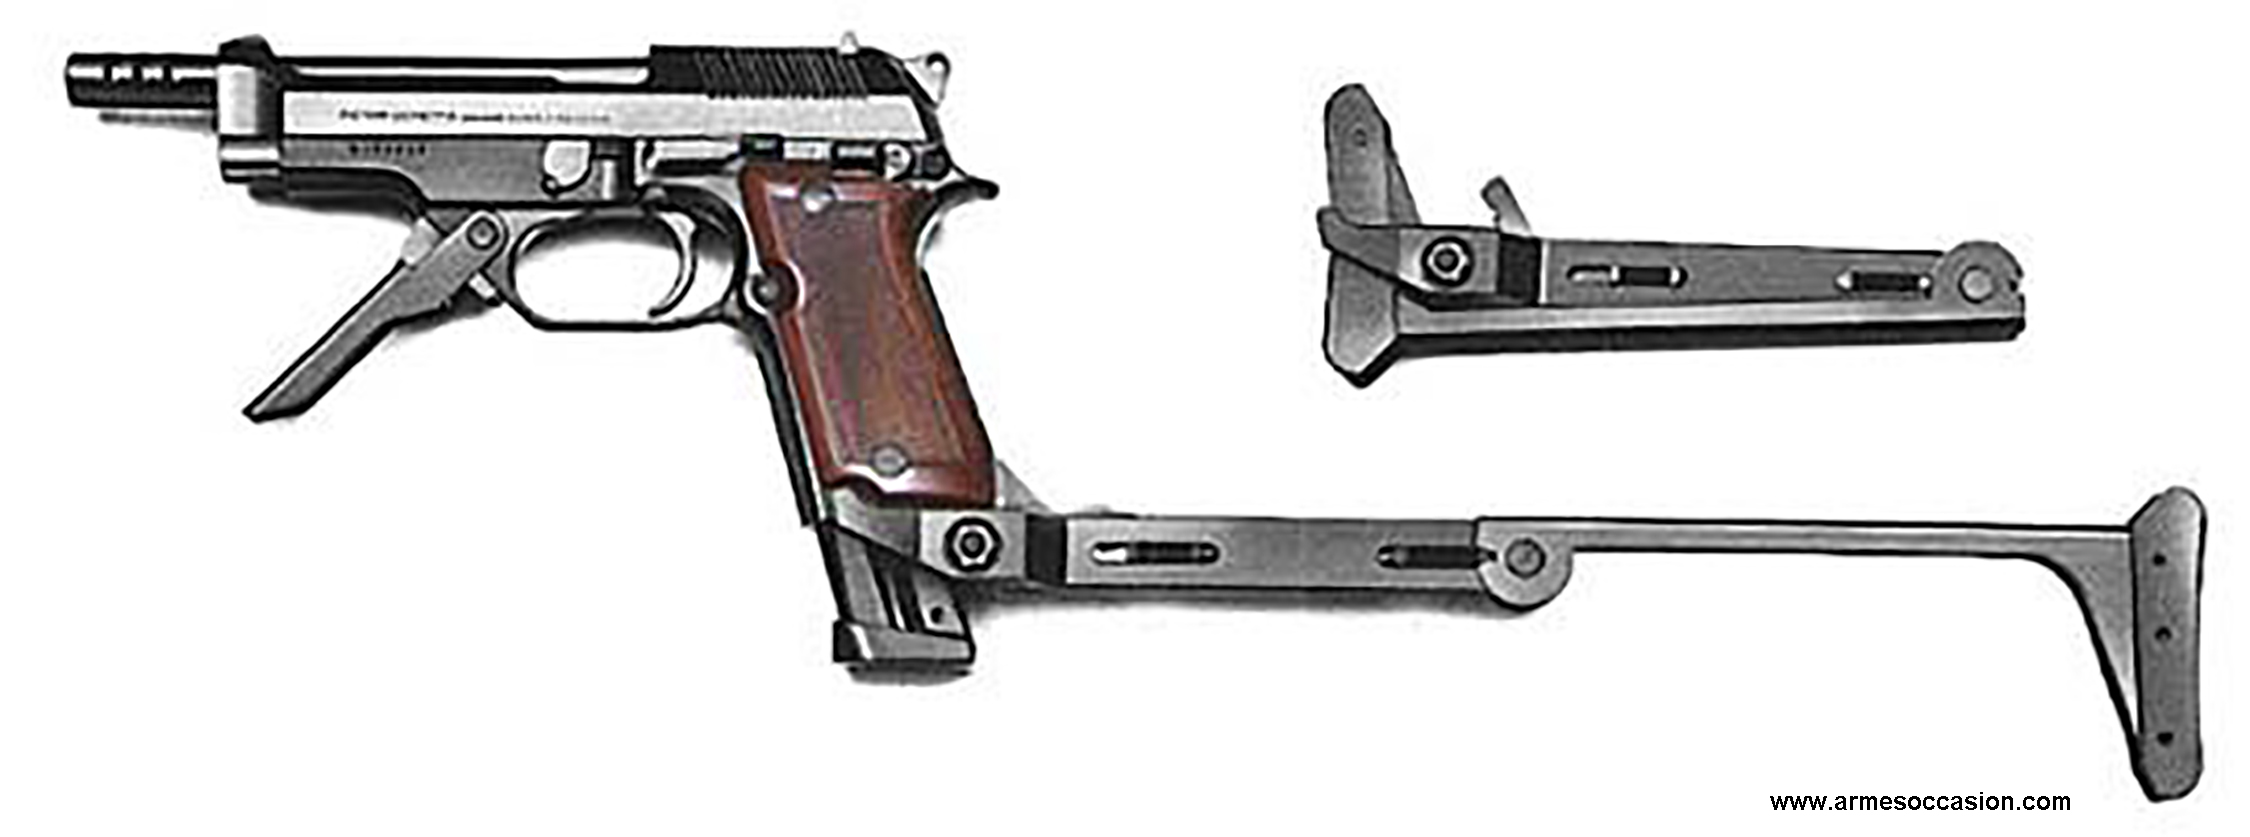 pistolet automatique Beretta 93R police scientifique 